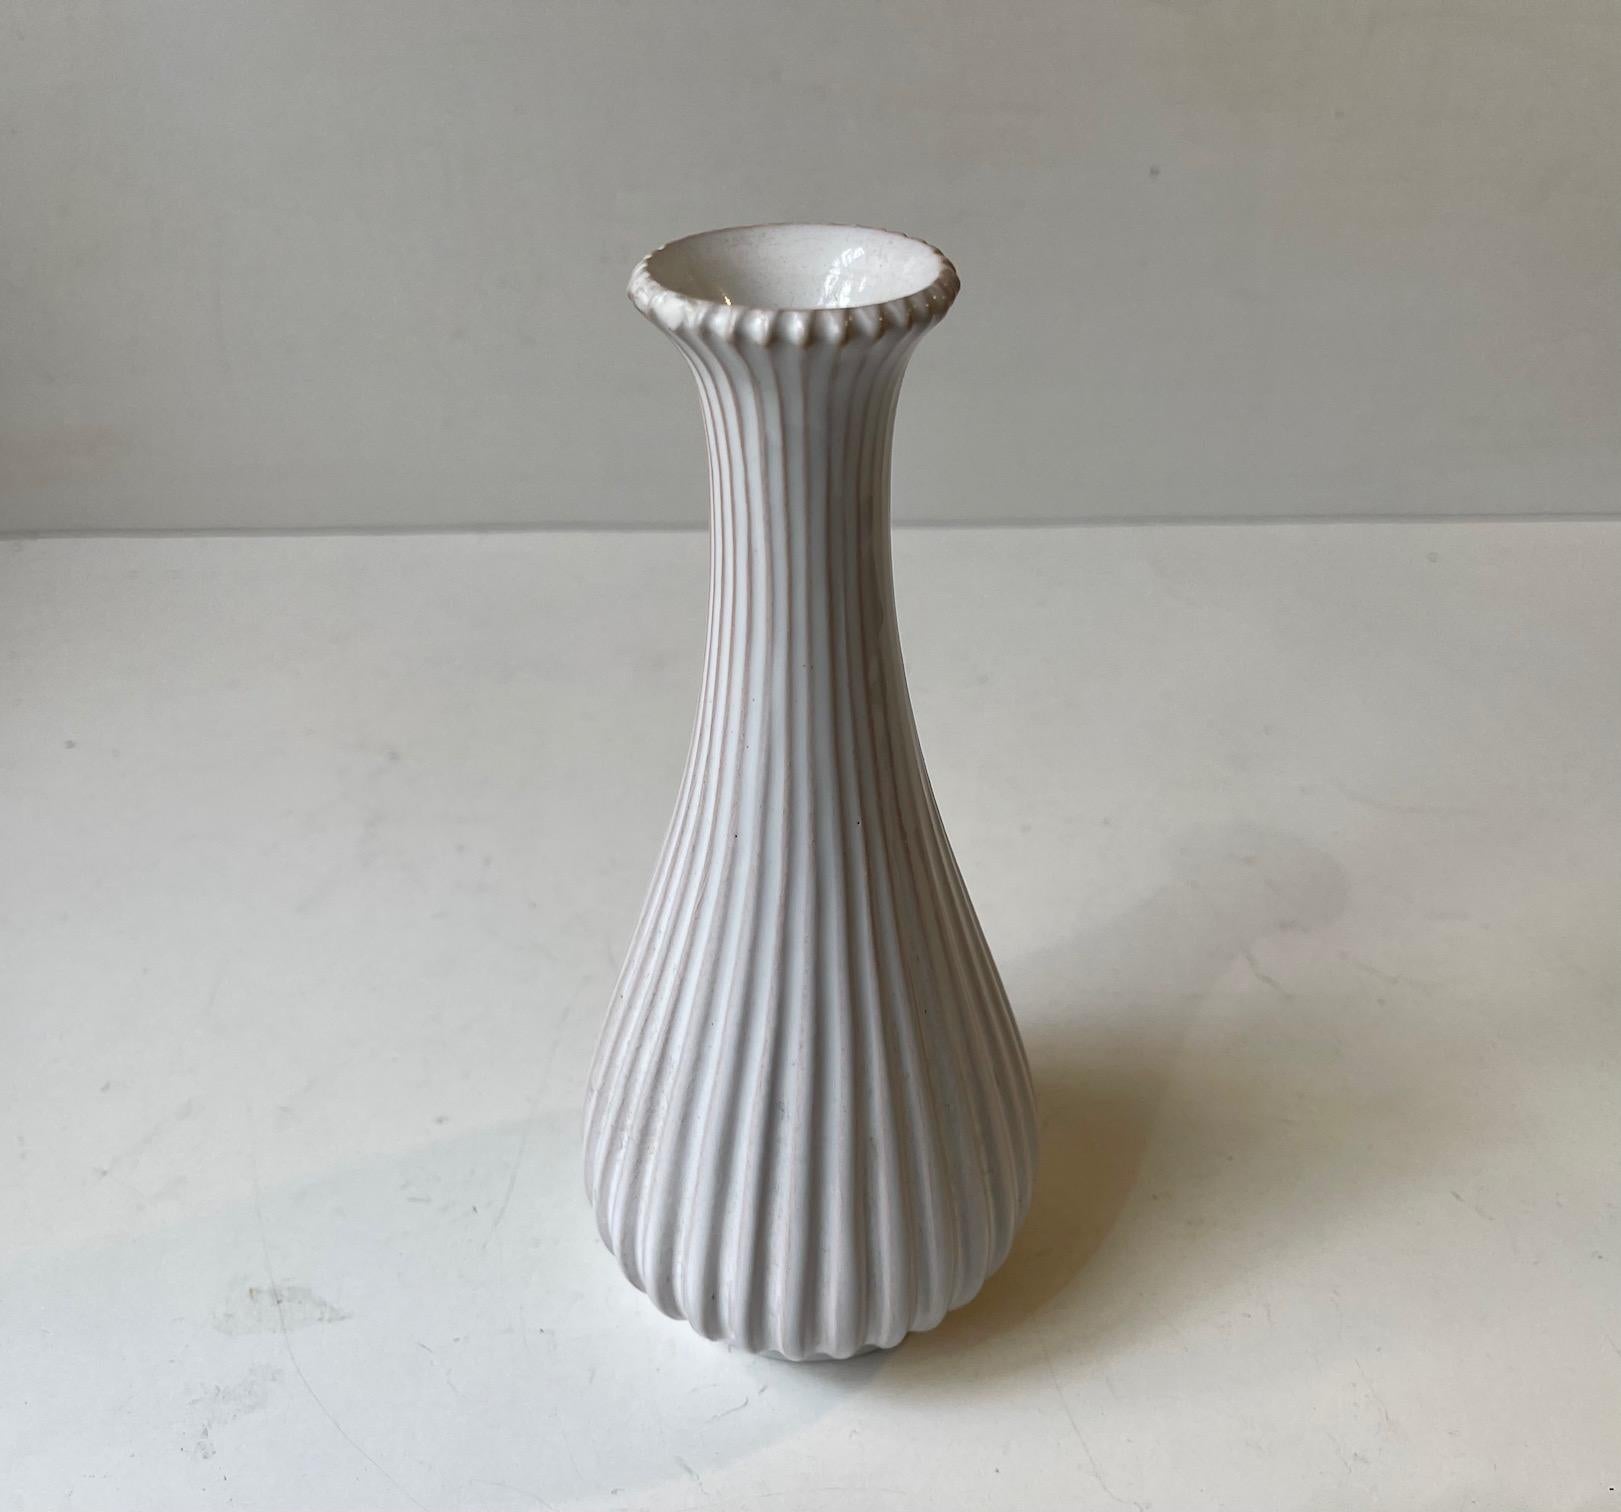 Glazed Fluted Ceramic Vase in White Glaze from Eslau, 1950s